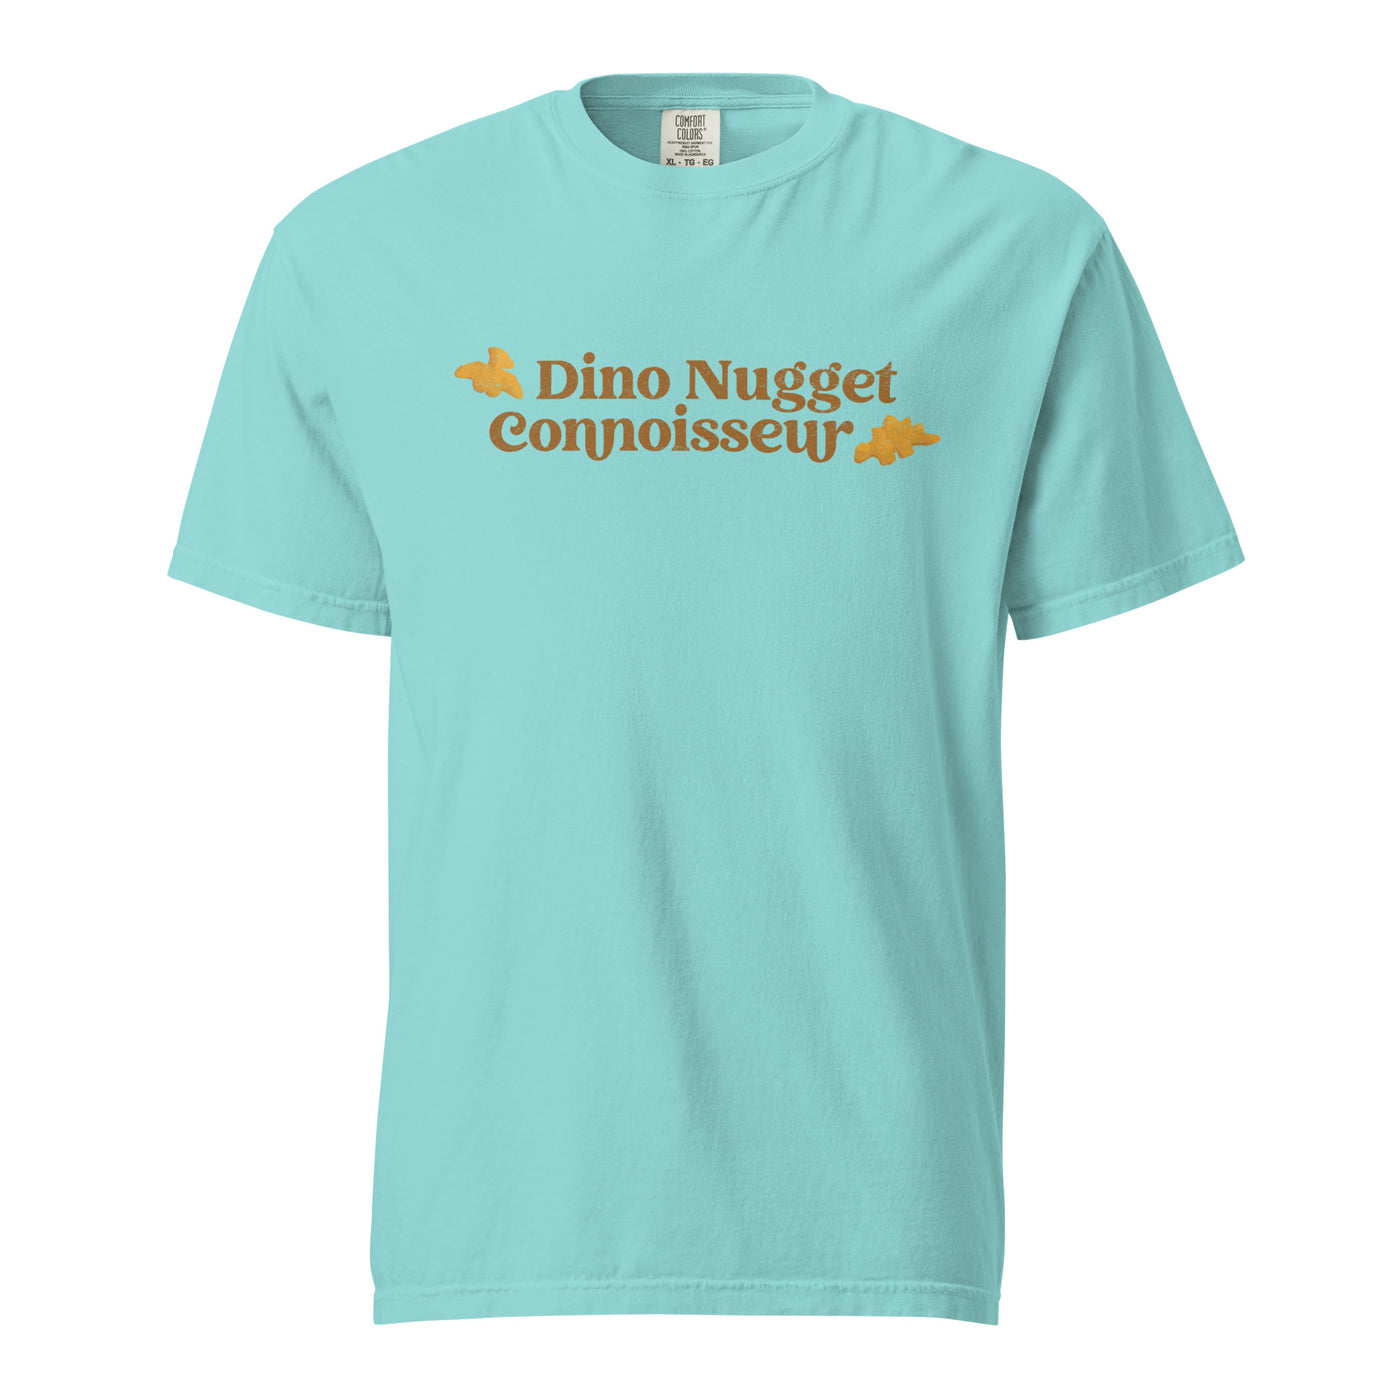 'Dino Nugget Connoisseur' T-Shirt